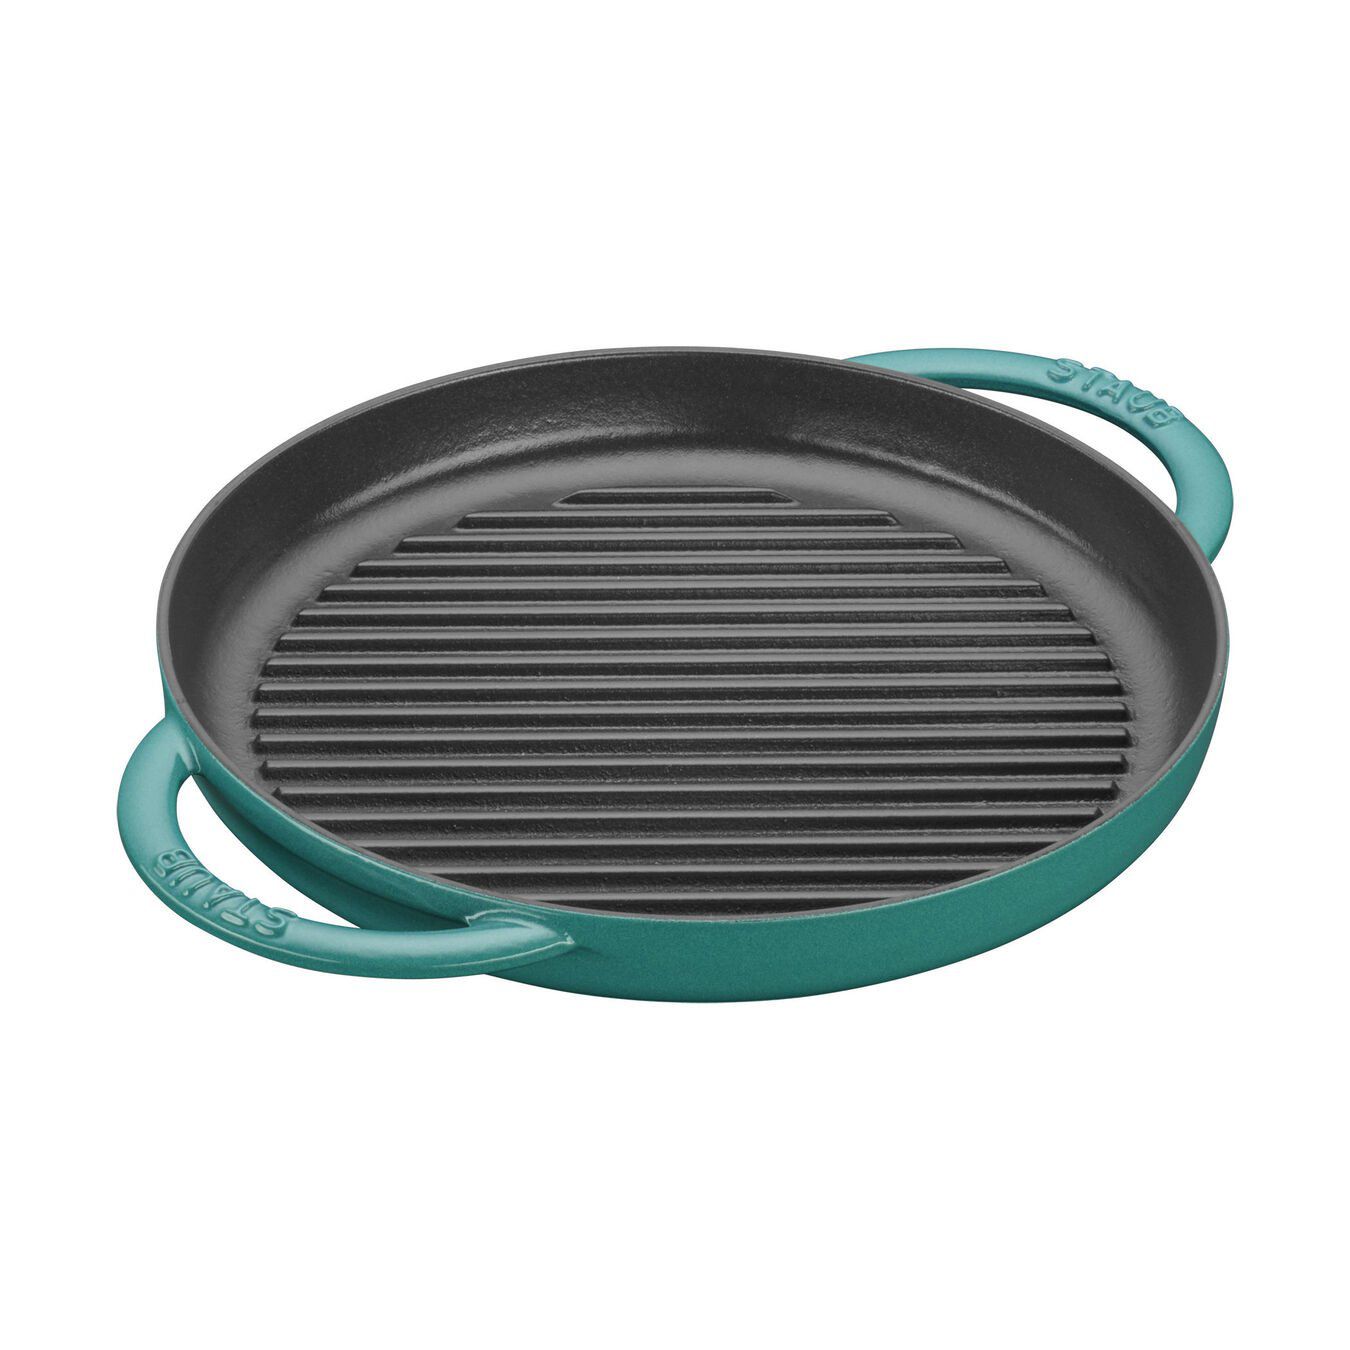 Staub grill pan